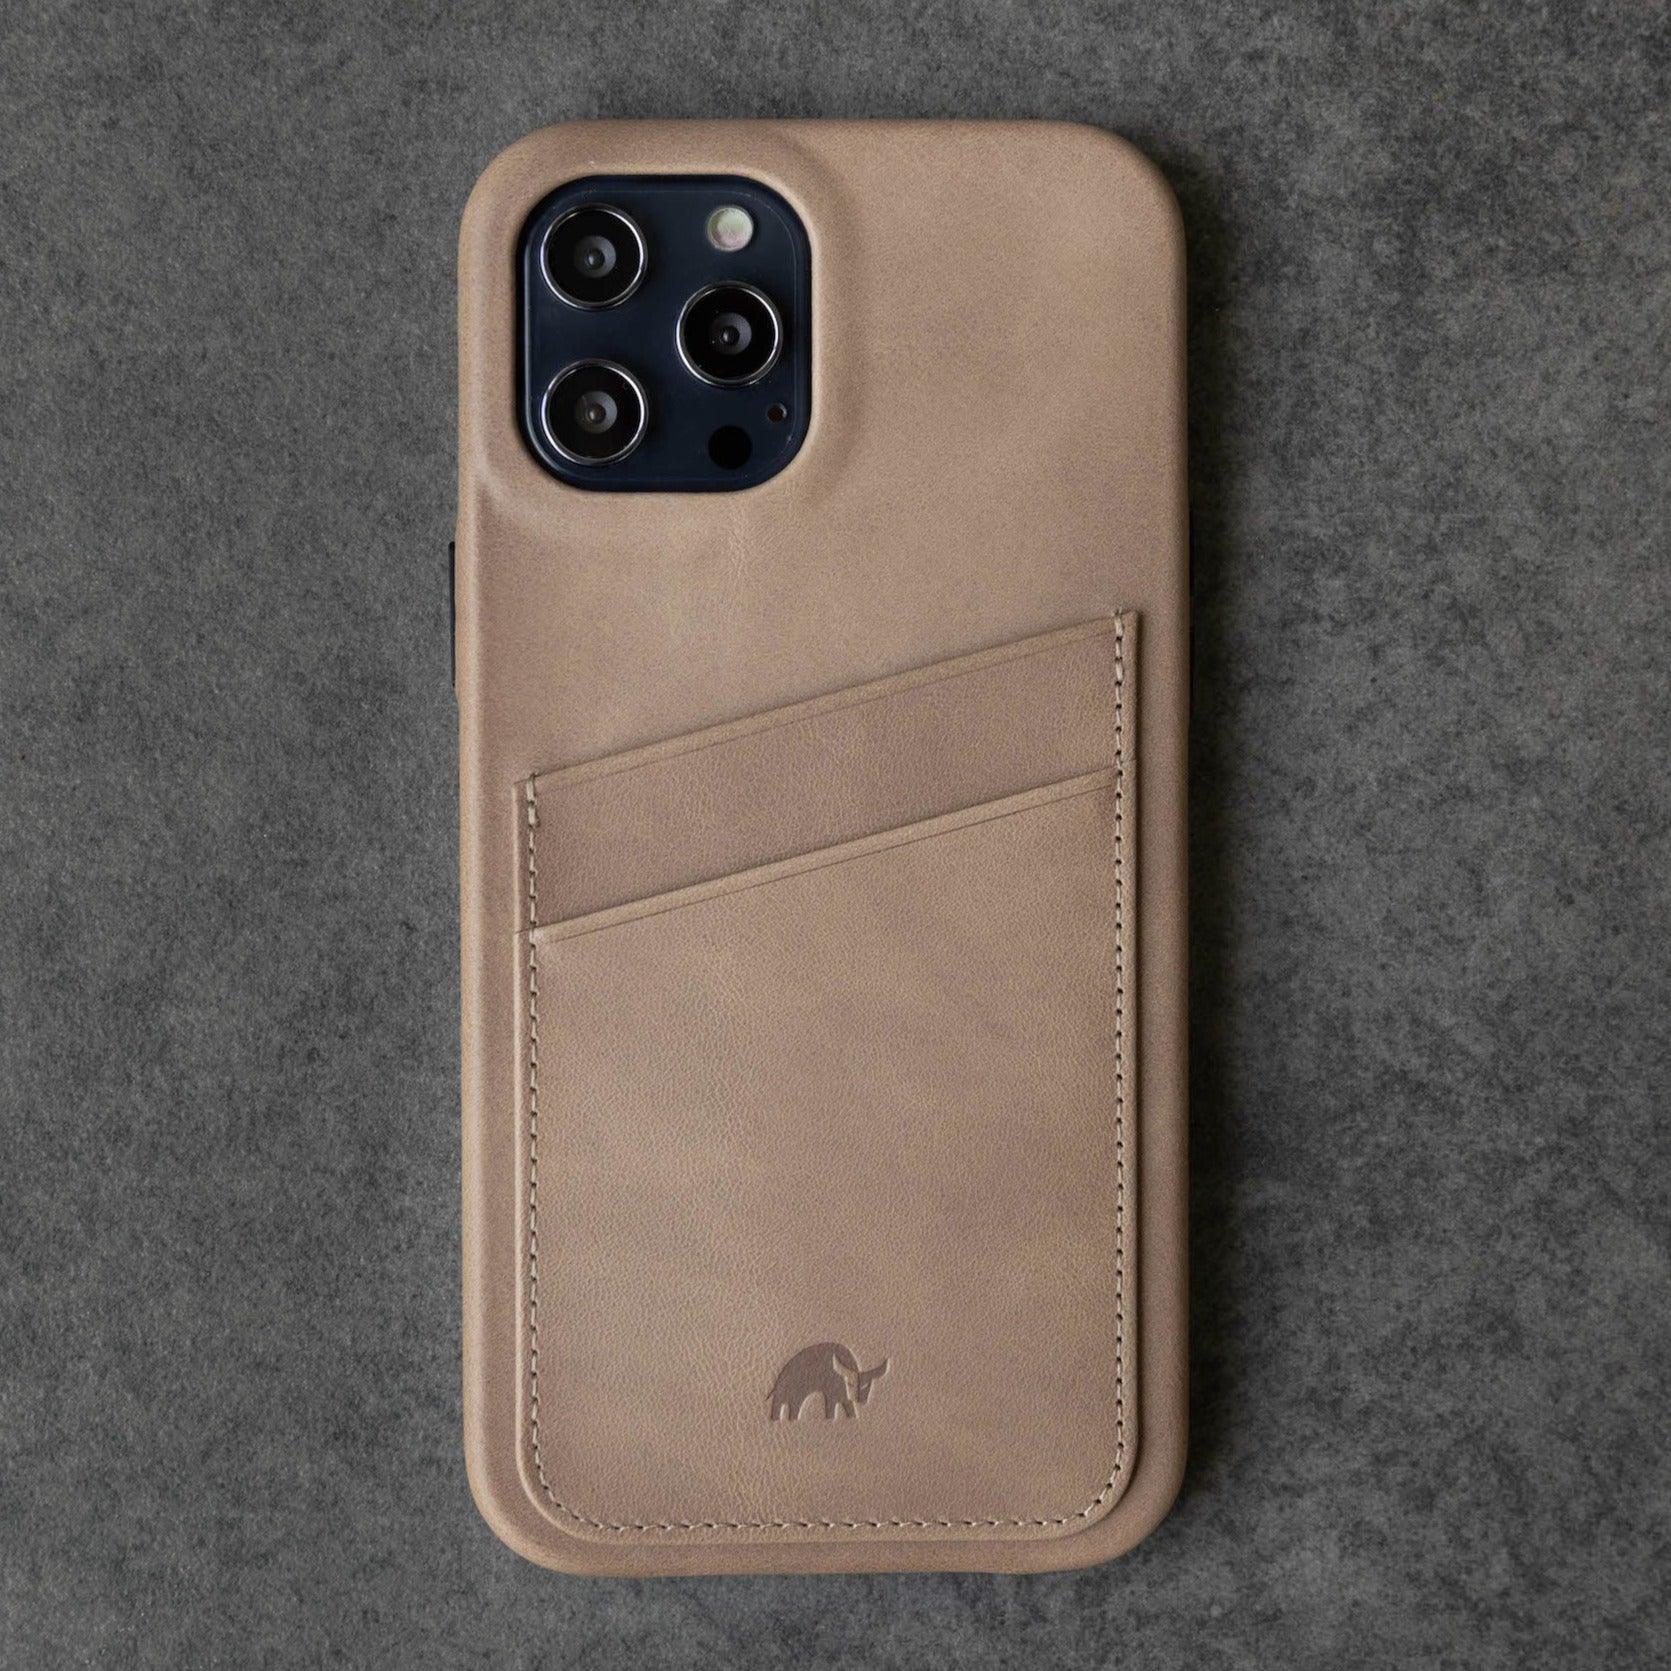 Portfolio iPhone Cases - Dune by Bullstrap - The Hammer Sports